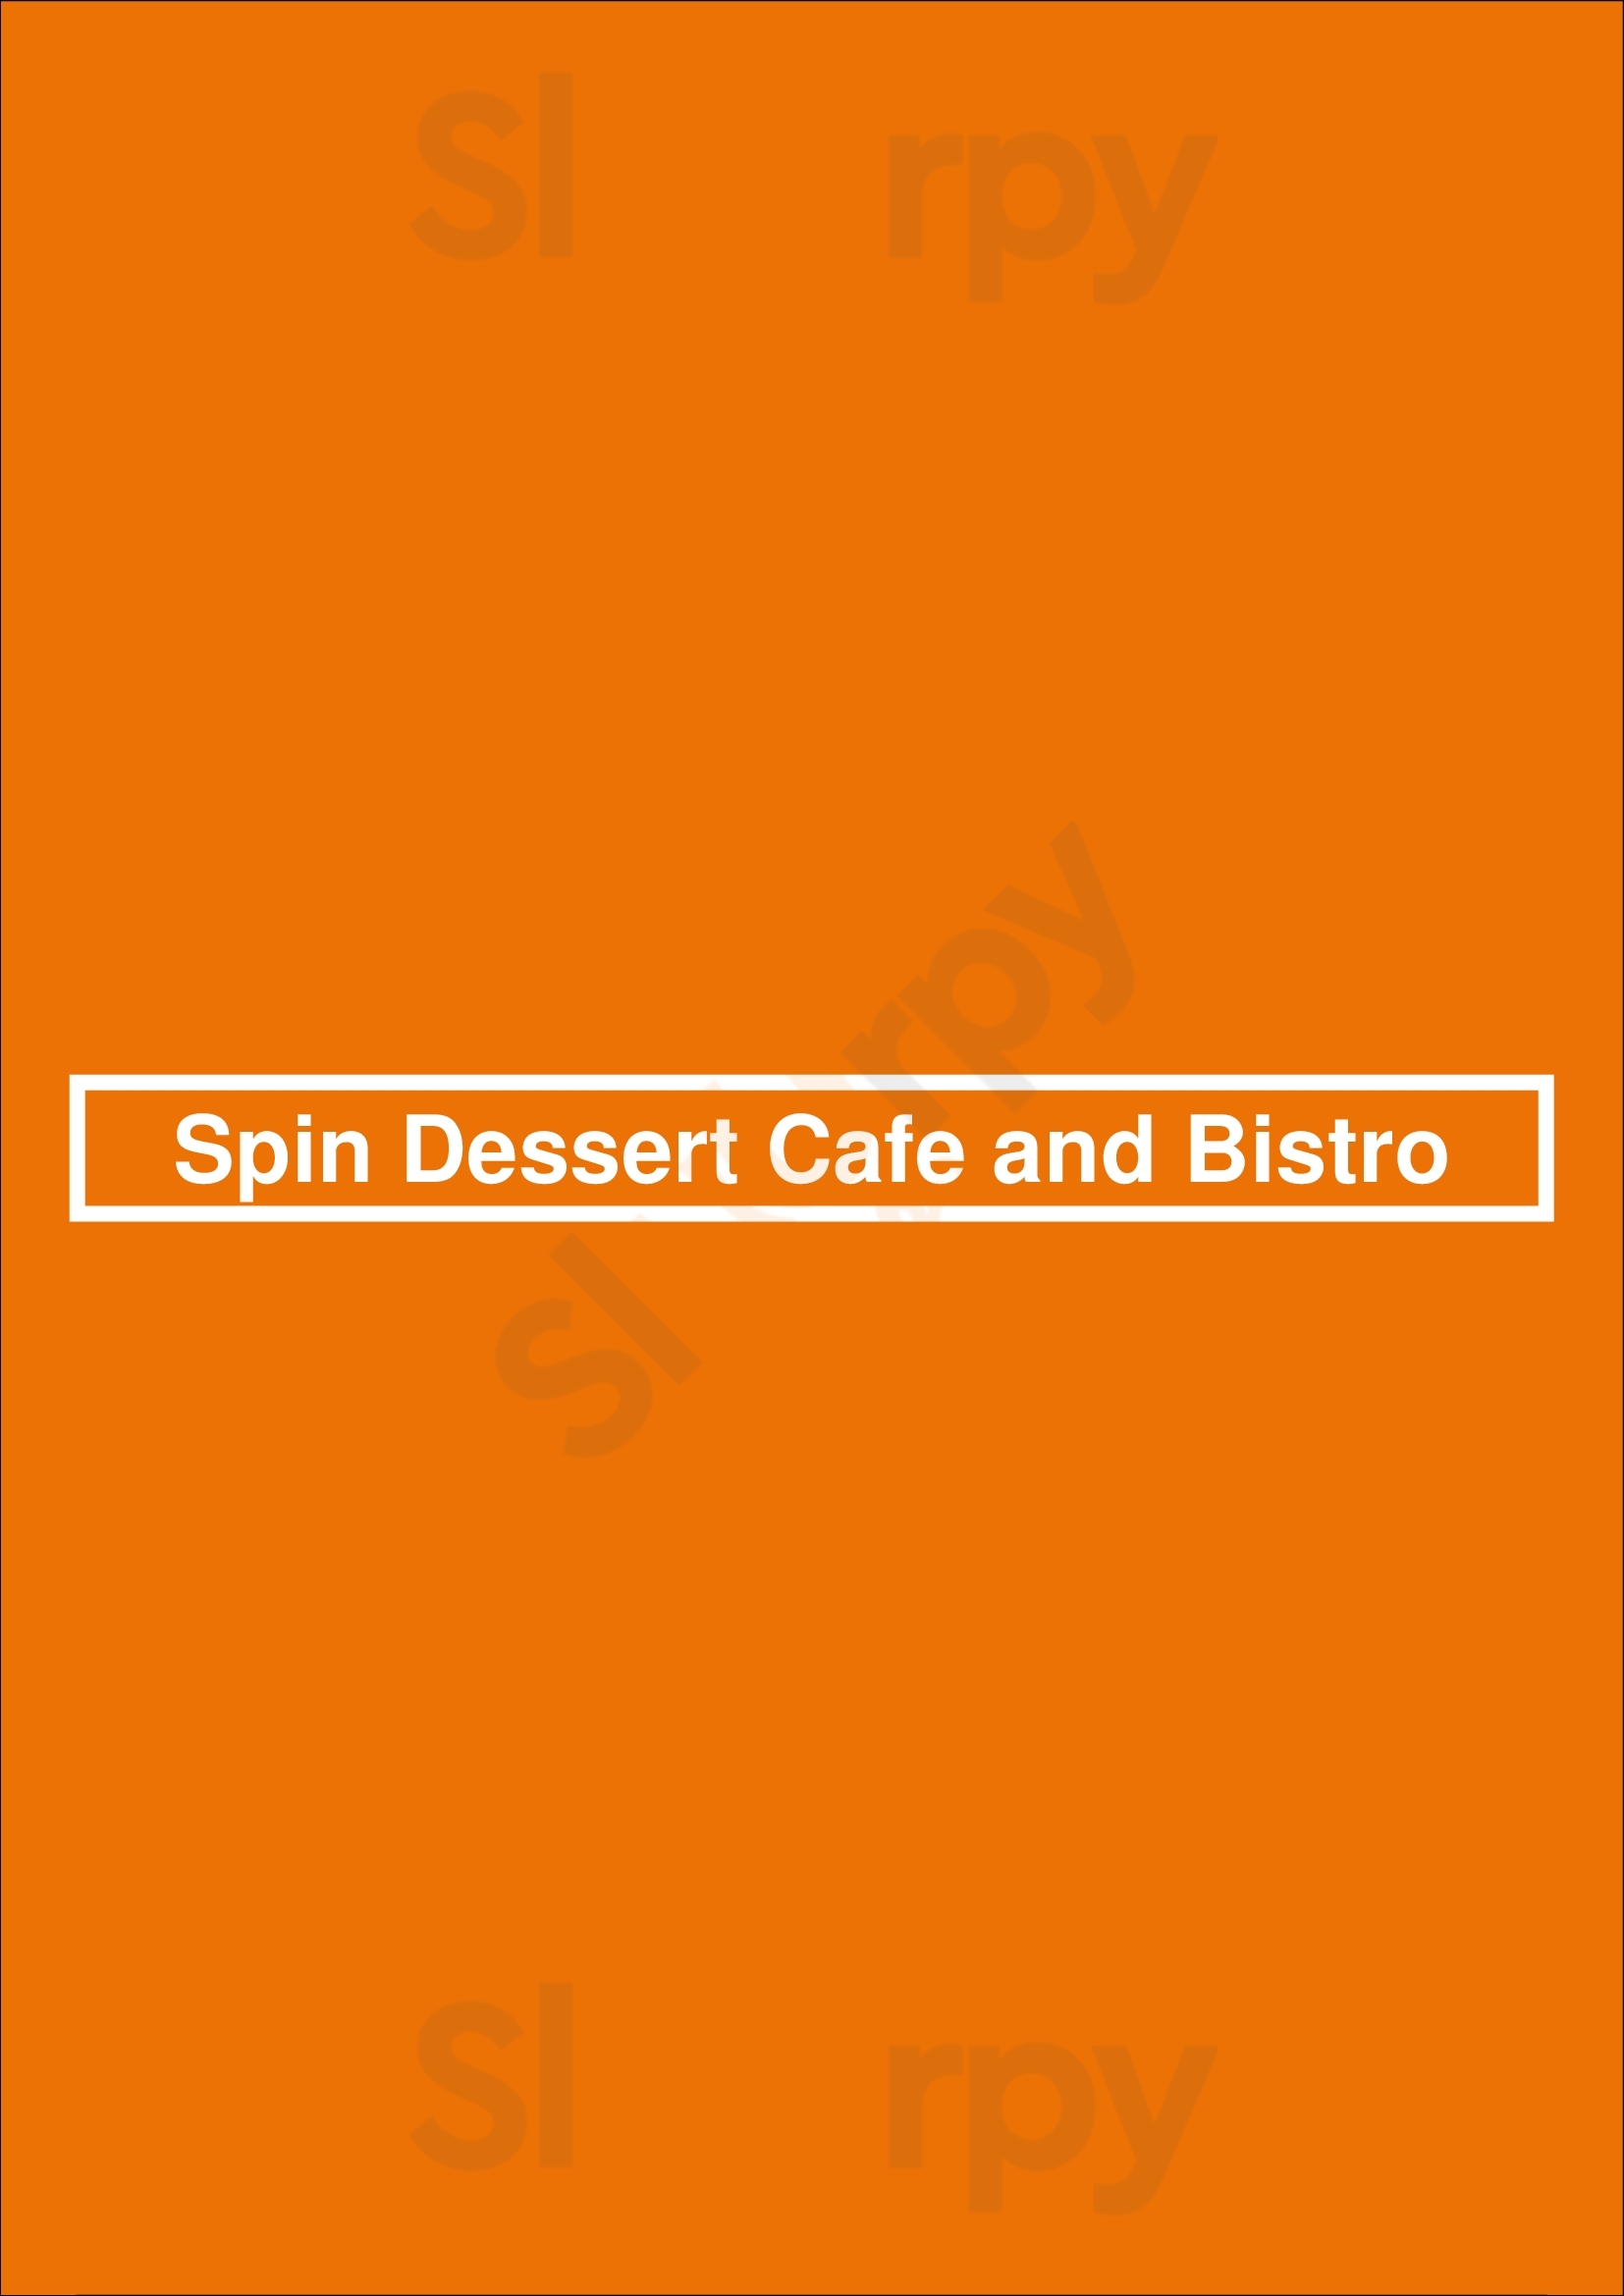 Spin Dessert Cafe And Bistro Pickering Menu - 1